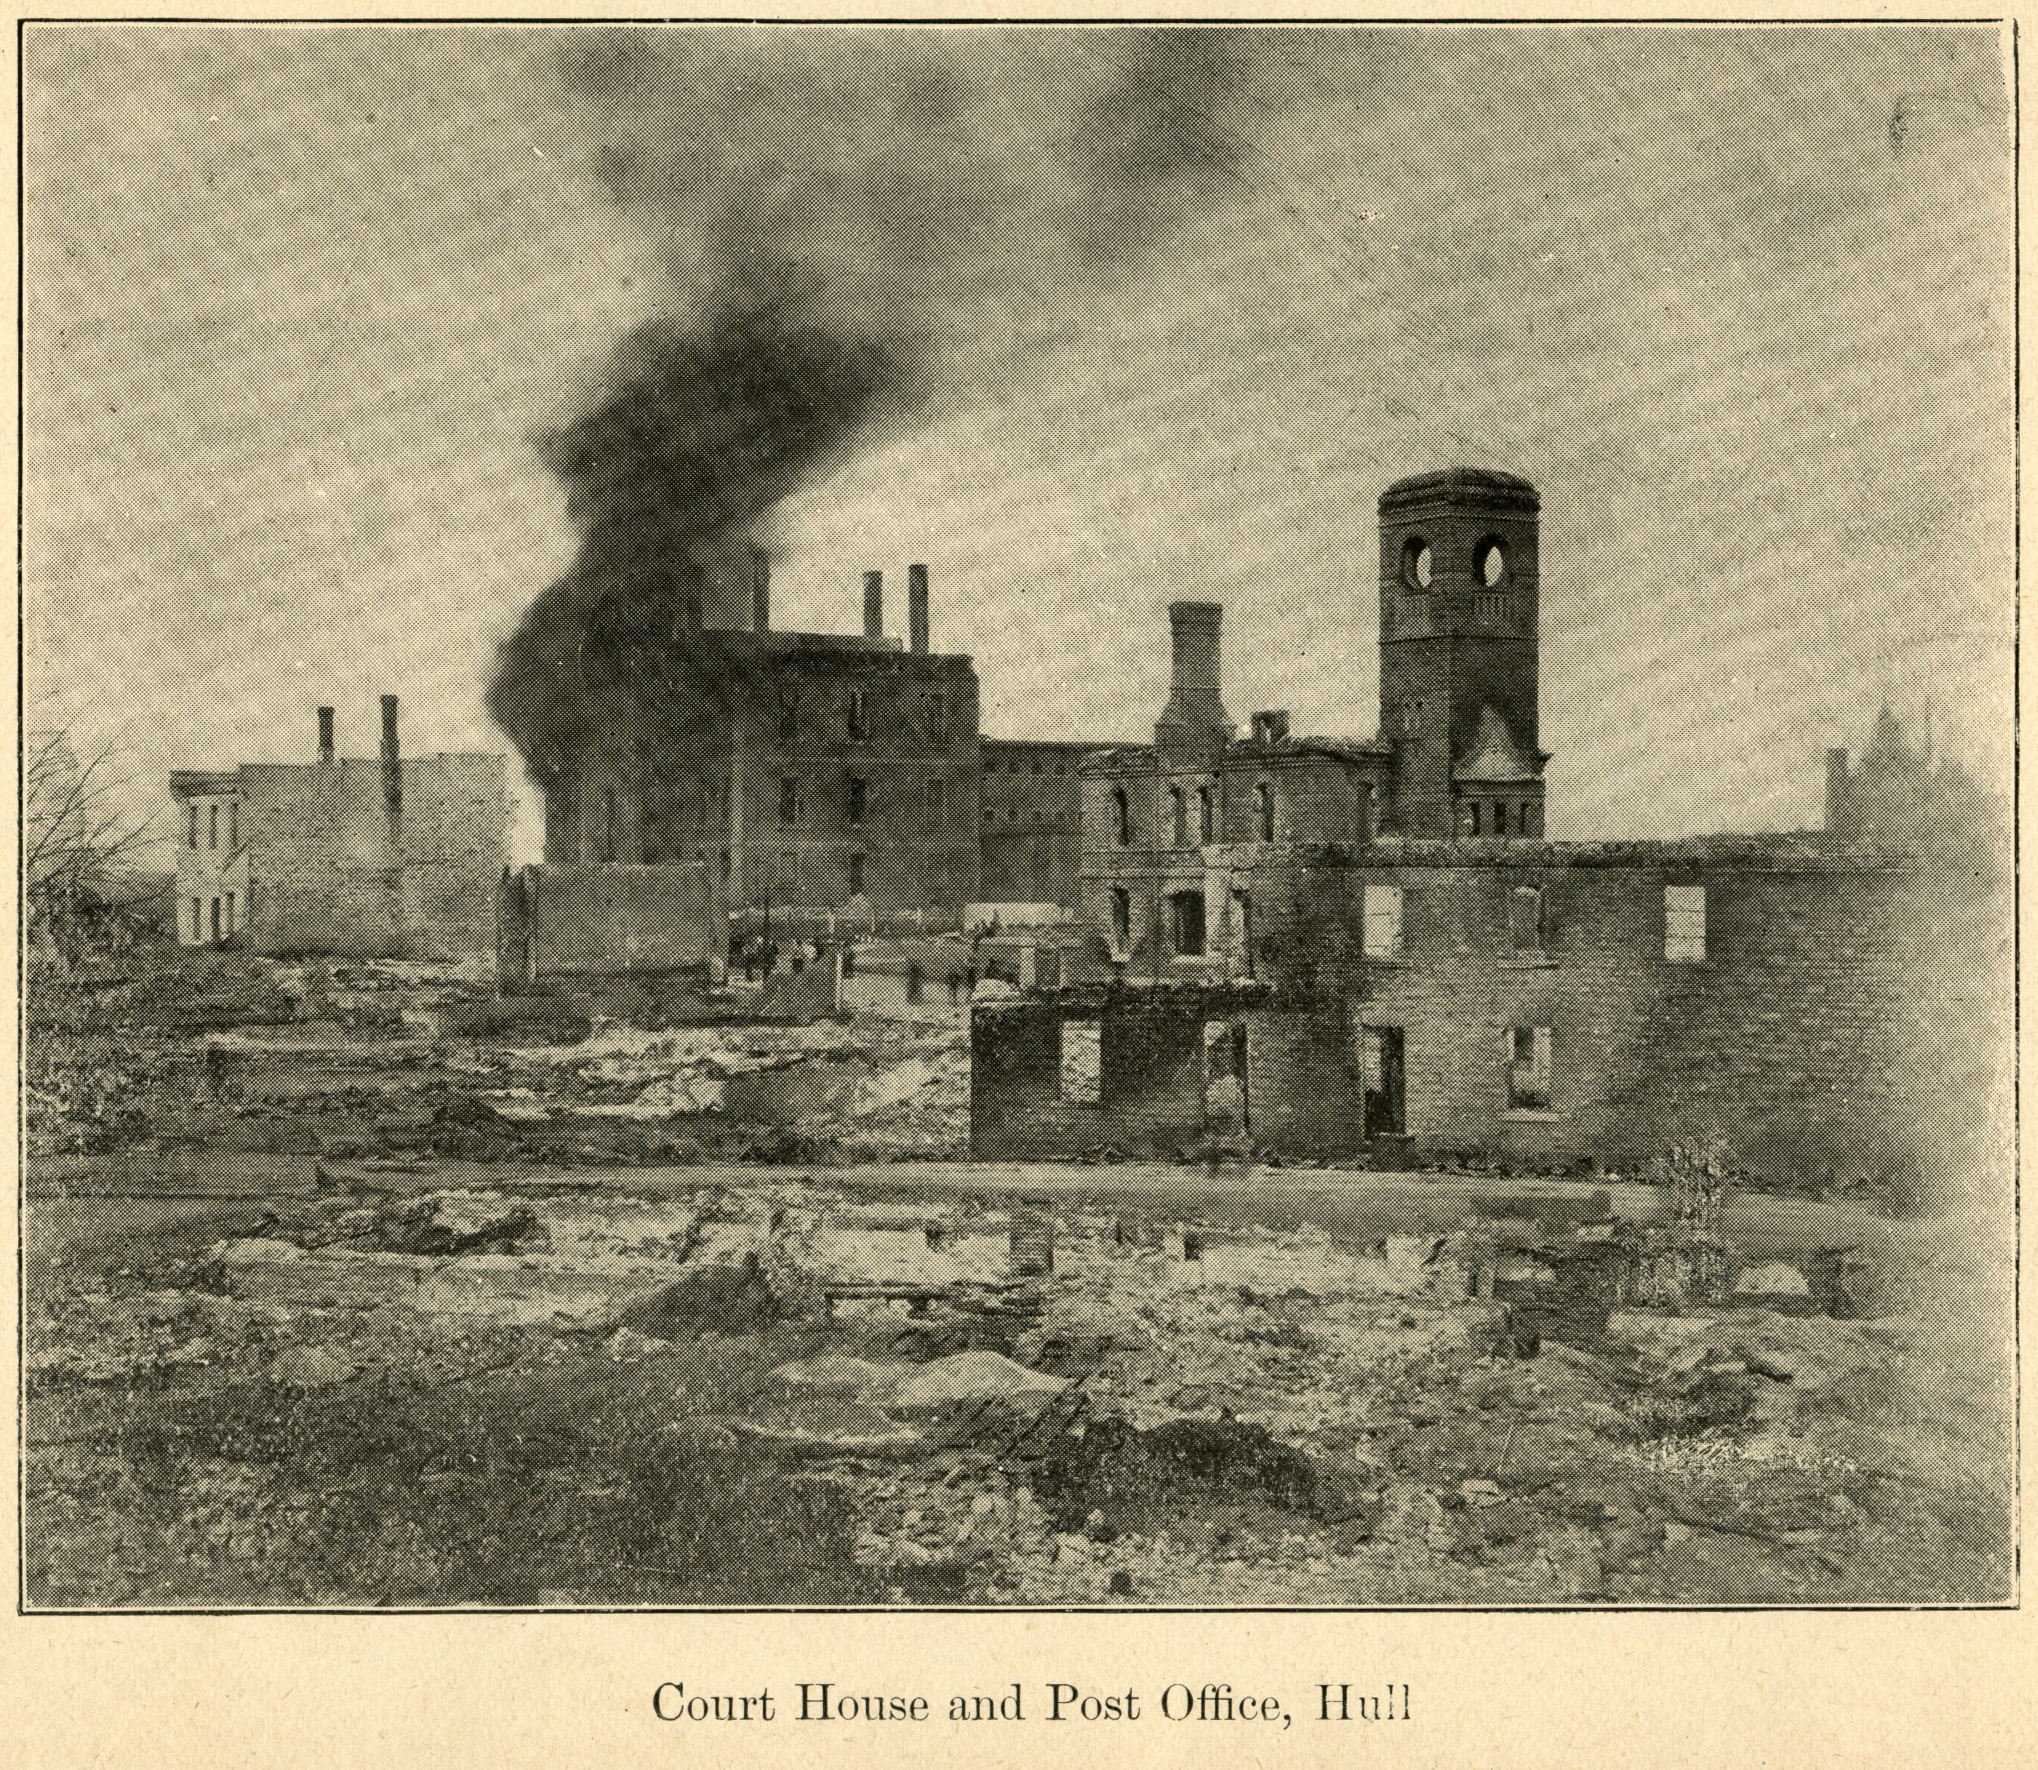 Souvenirs of the Past: Ottawa's Great Fire of 1900 | BYTOWN MUSEUM Youth Council | Le conseil des jeunes du MUSÉE BYTOWN